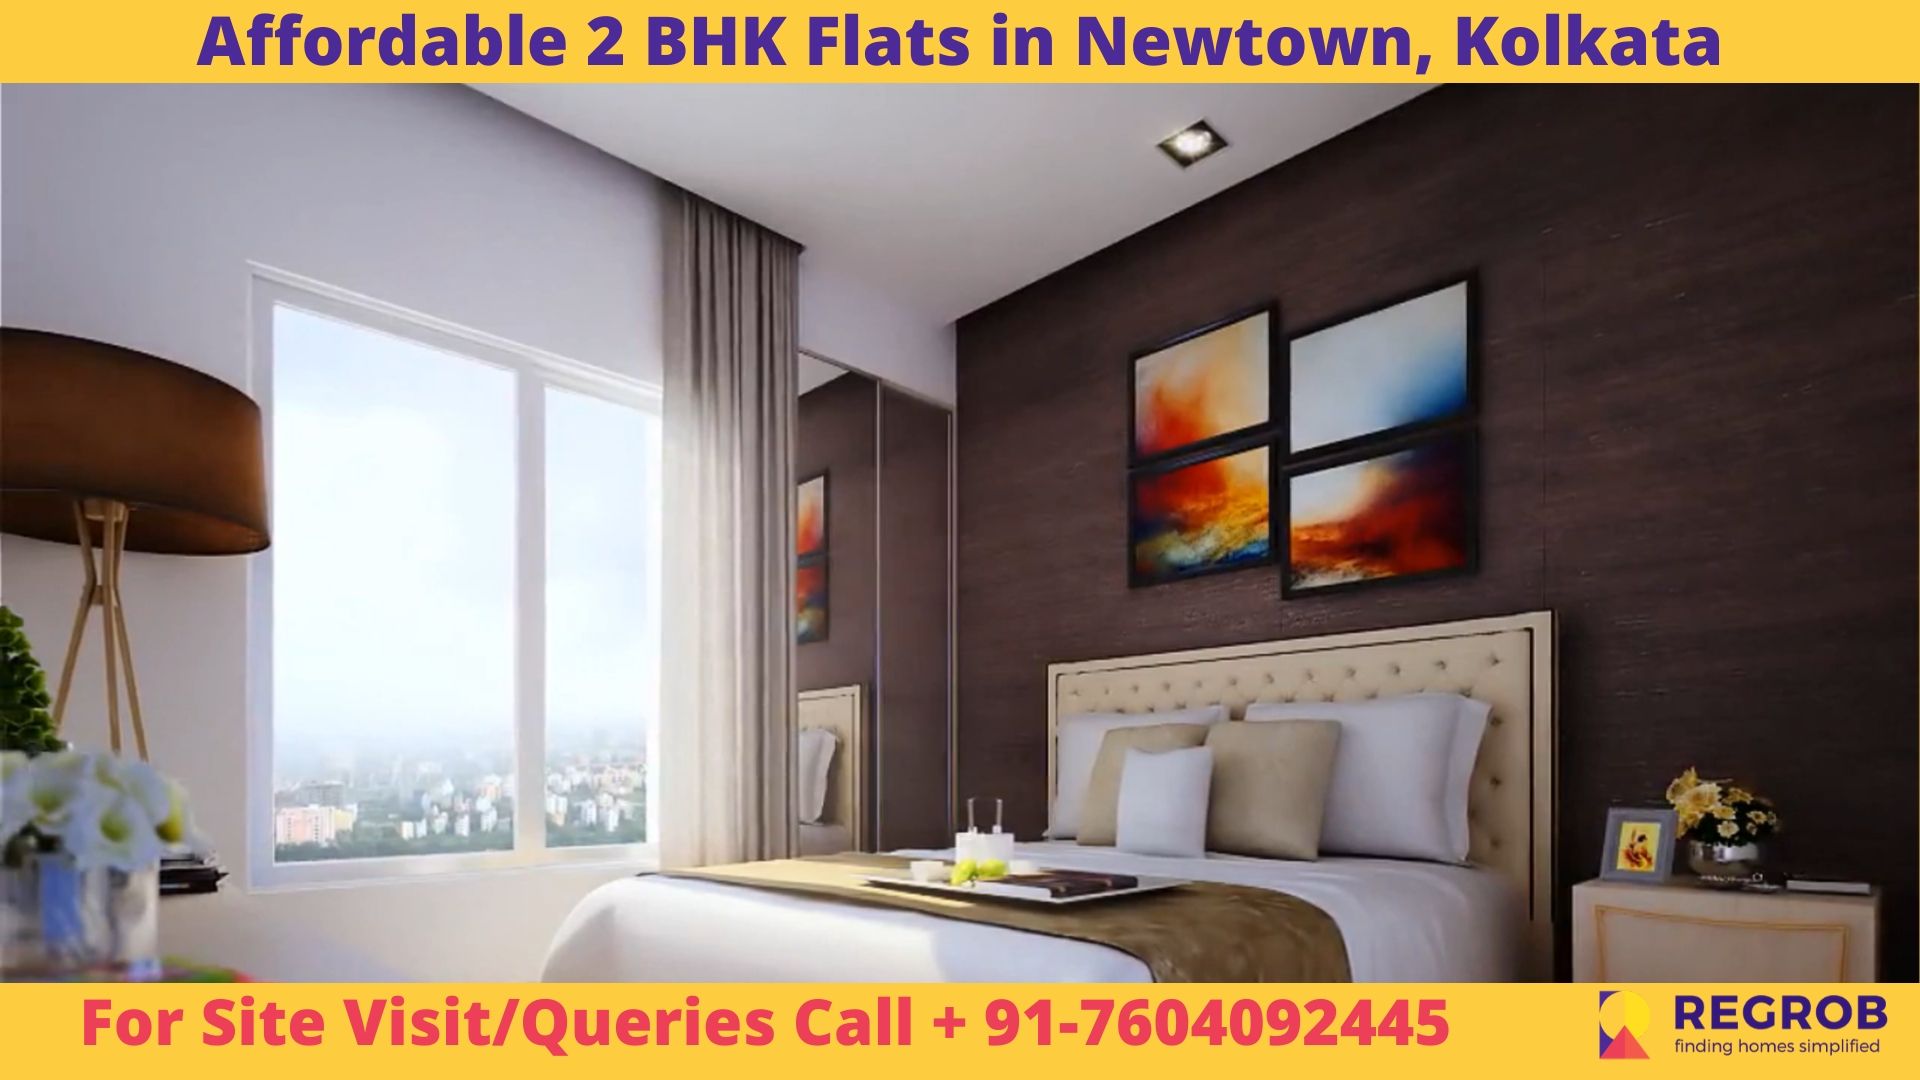 Affordable 2 BHK Flats in Newtown, Kolkata